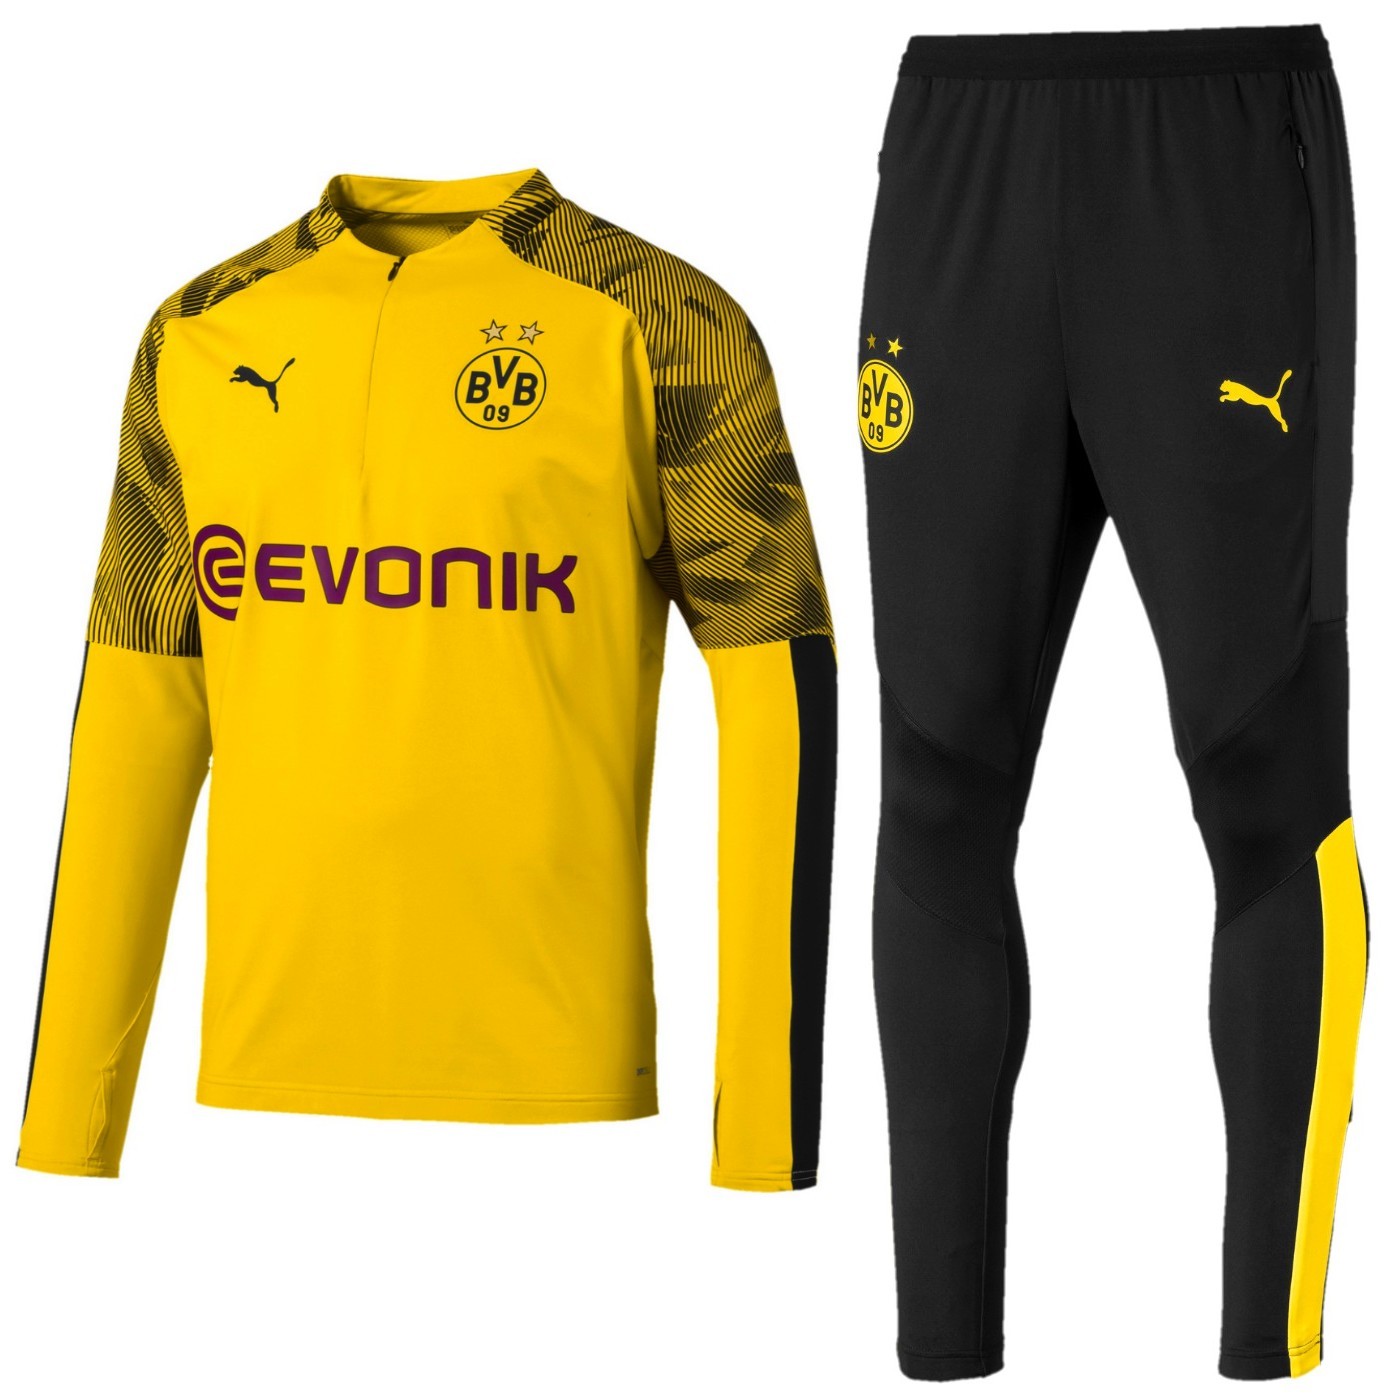 Chandal BVB Borussia Dortmund 2019/20 - Puma